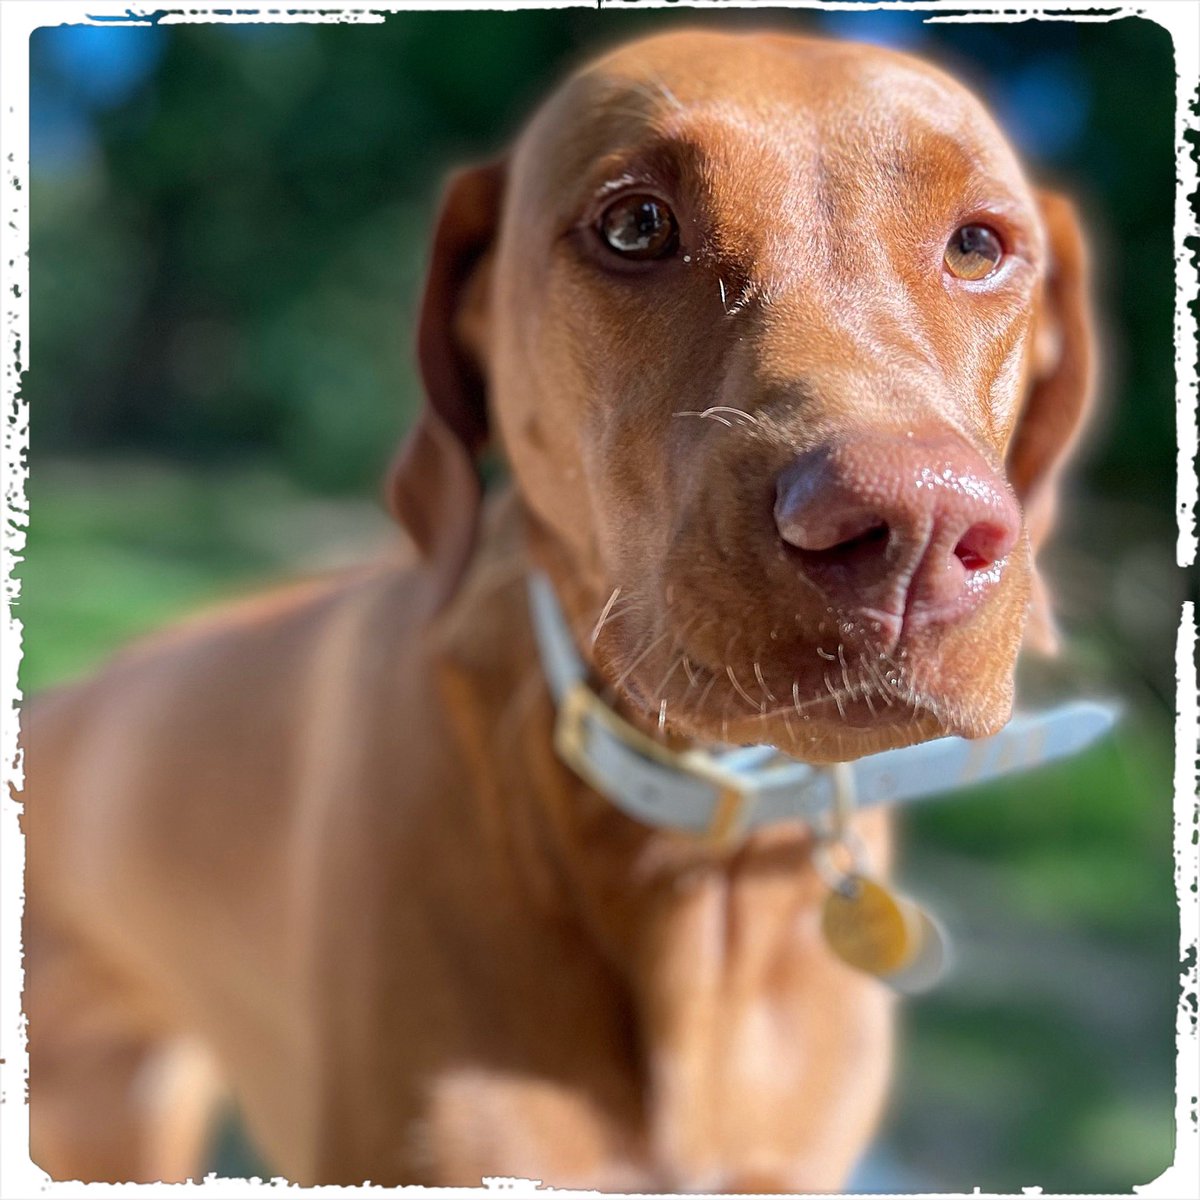 Hallo - Ich bin Cleo 😁🐶😁…. 
#doglover #ilovemydog #instadog  #dogislove #trustrespectlove #hundeland #hundeblog #lieblingshund #fellnase  #besterhund  #dogsneeddogs